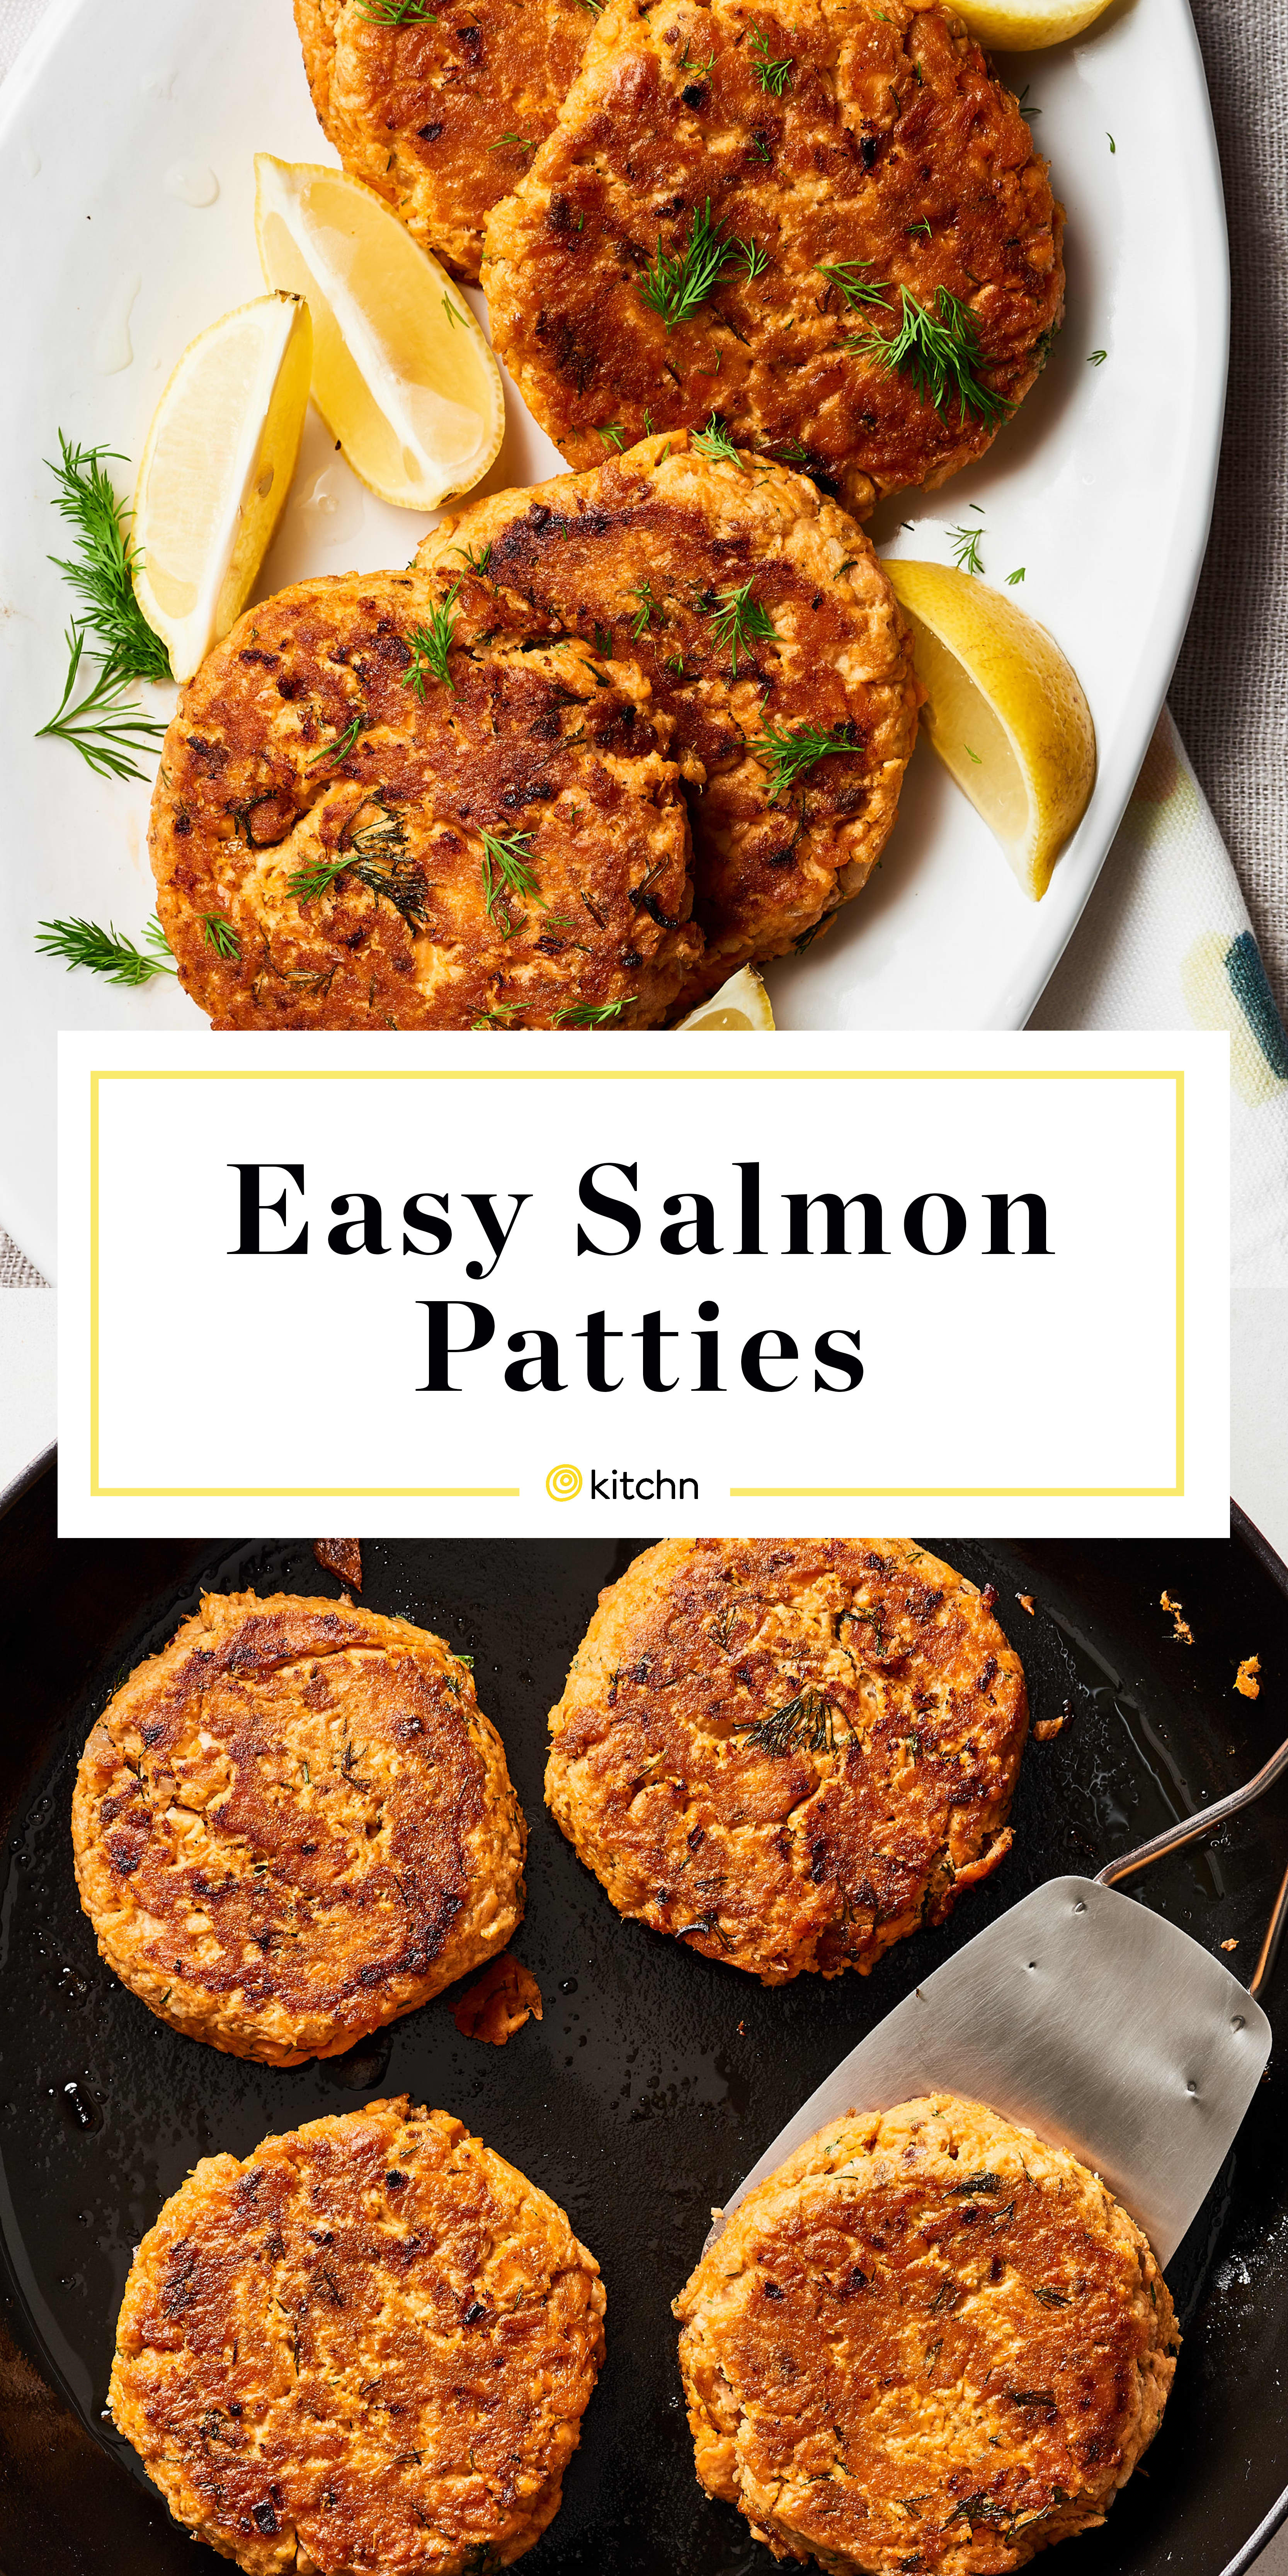 Salmon Patties Recipe Kitchn,Best Sheets To Buy At Kohls